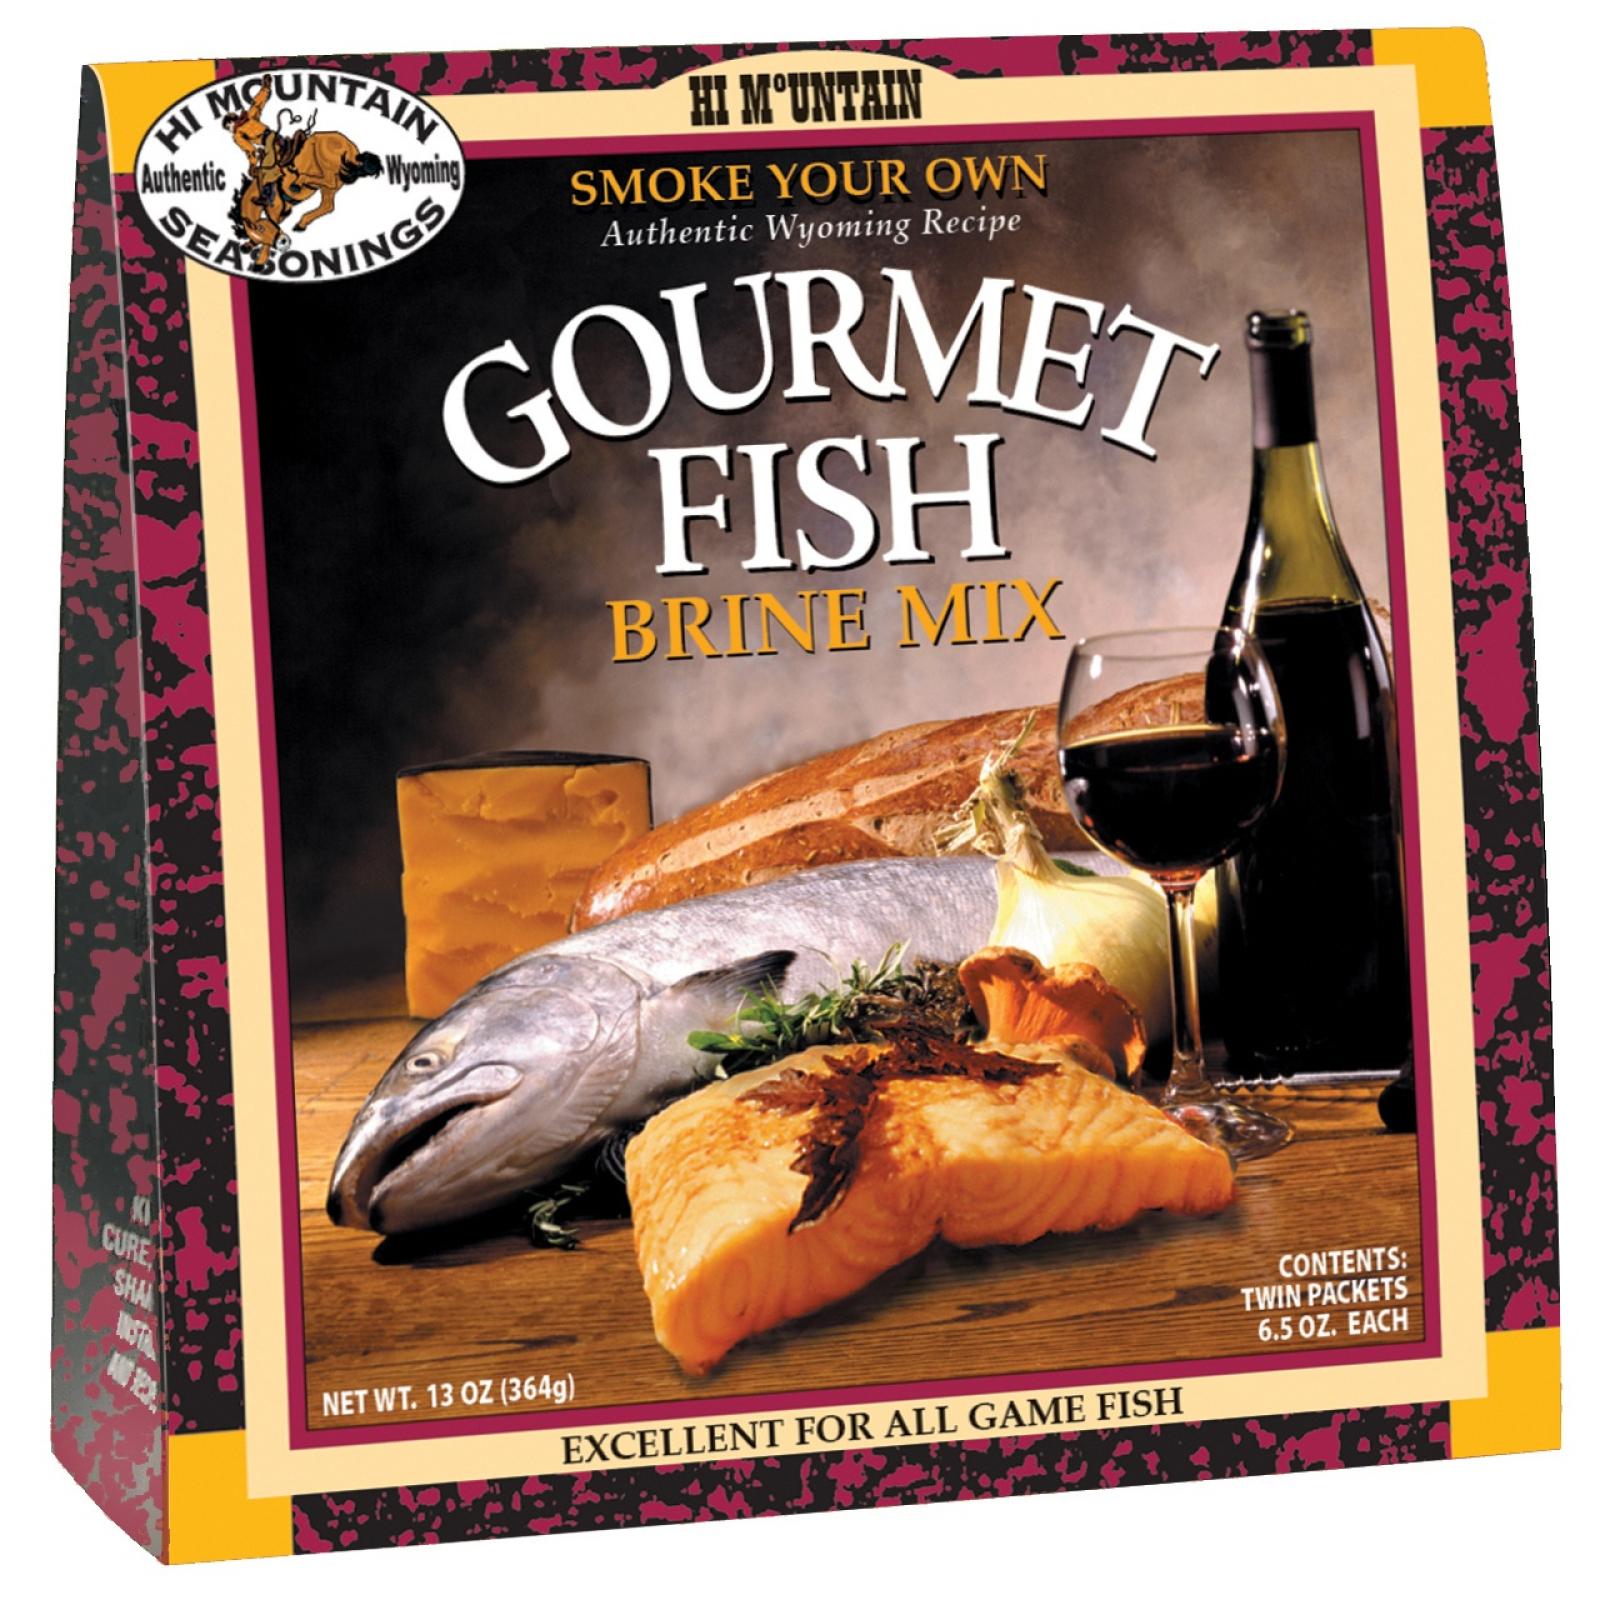 HI Mountain Gourmet Fish Brine Mix